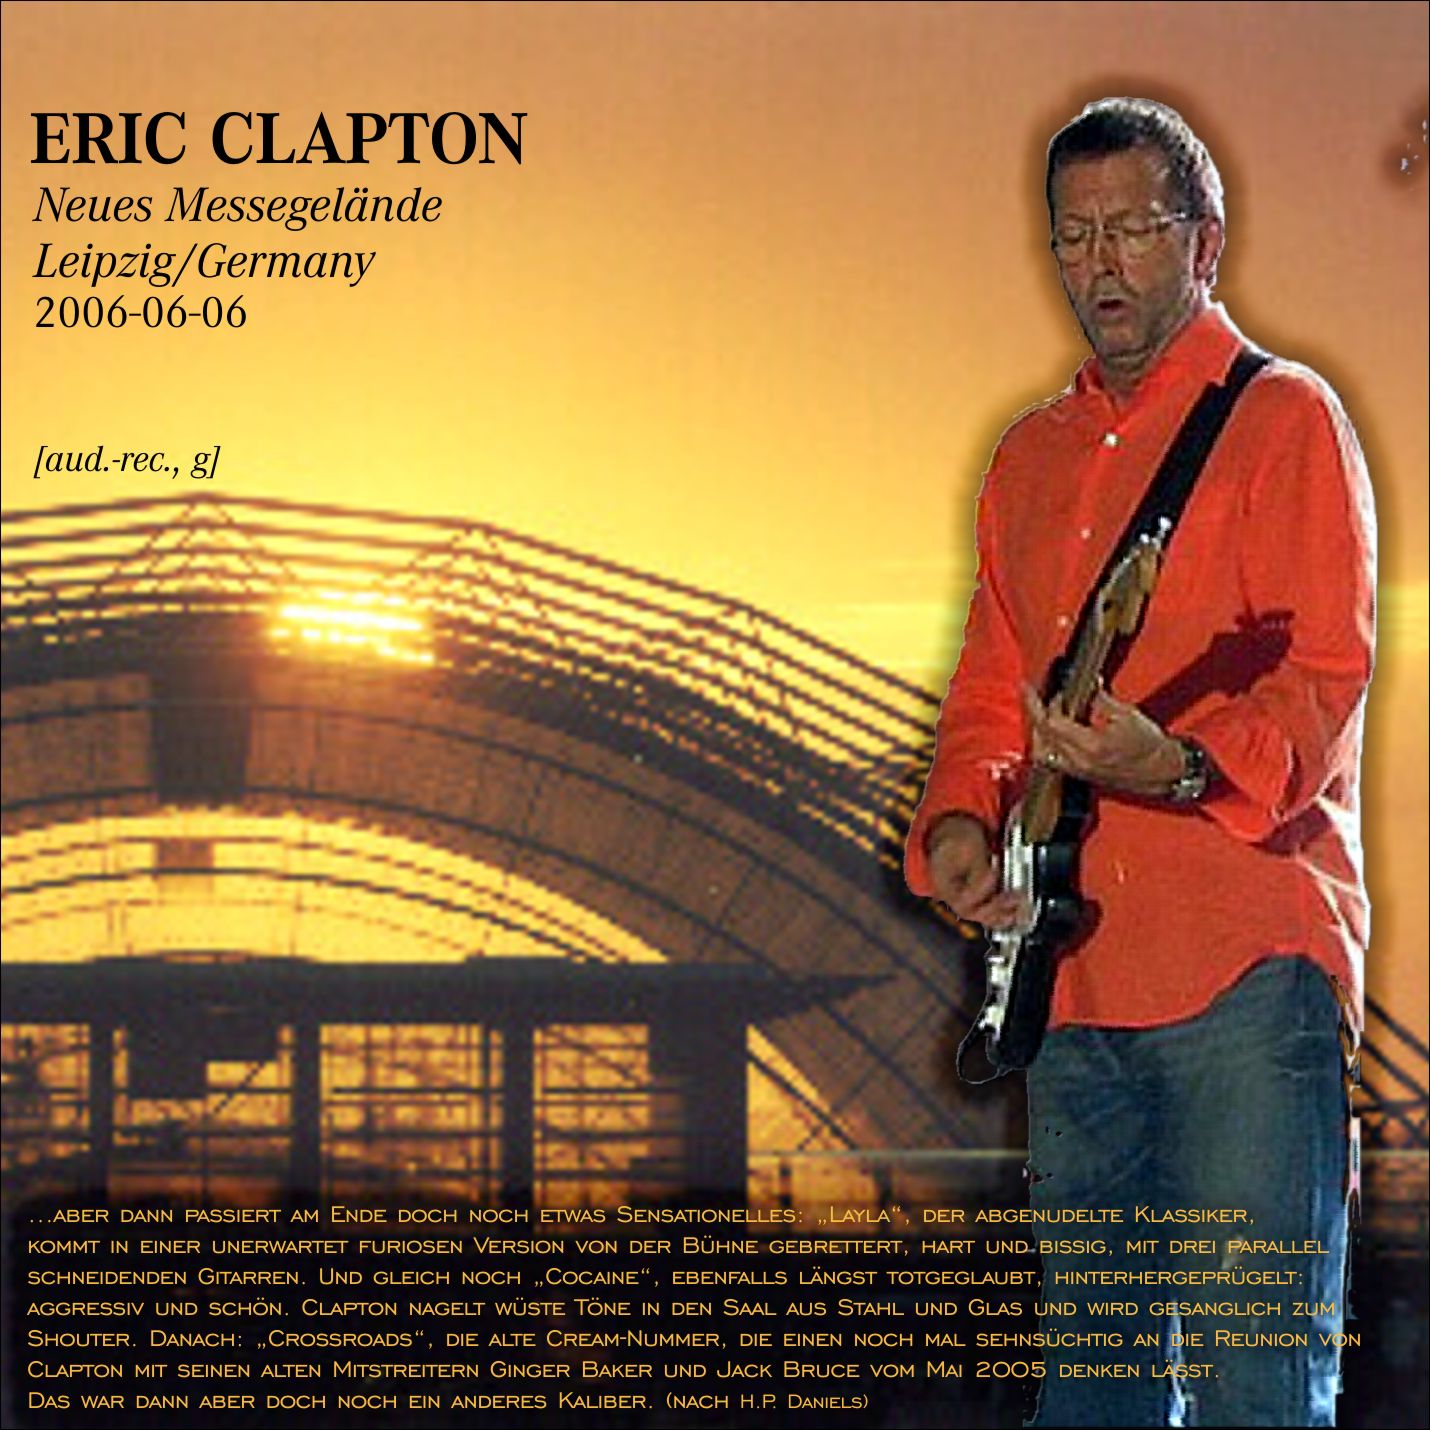 EricClapton2006-06-06MessegelandeLeipzigGermany (2).jpg